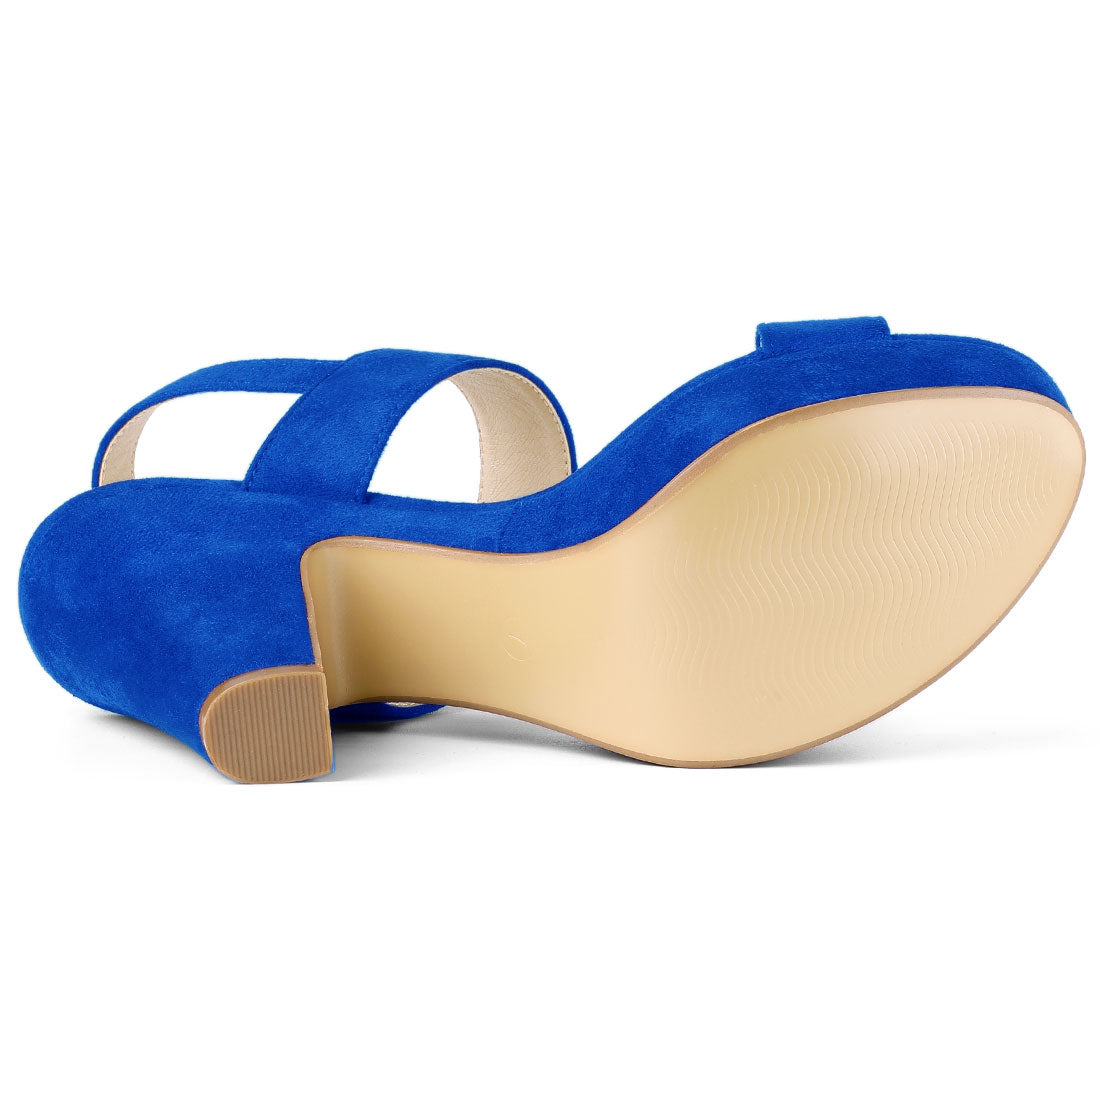 Allegra K Faux Suede Platform Chunky High Heel Slingback Sandals